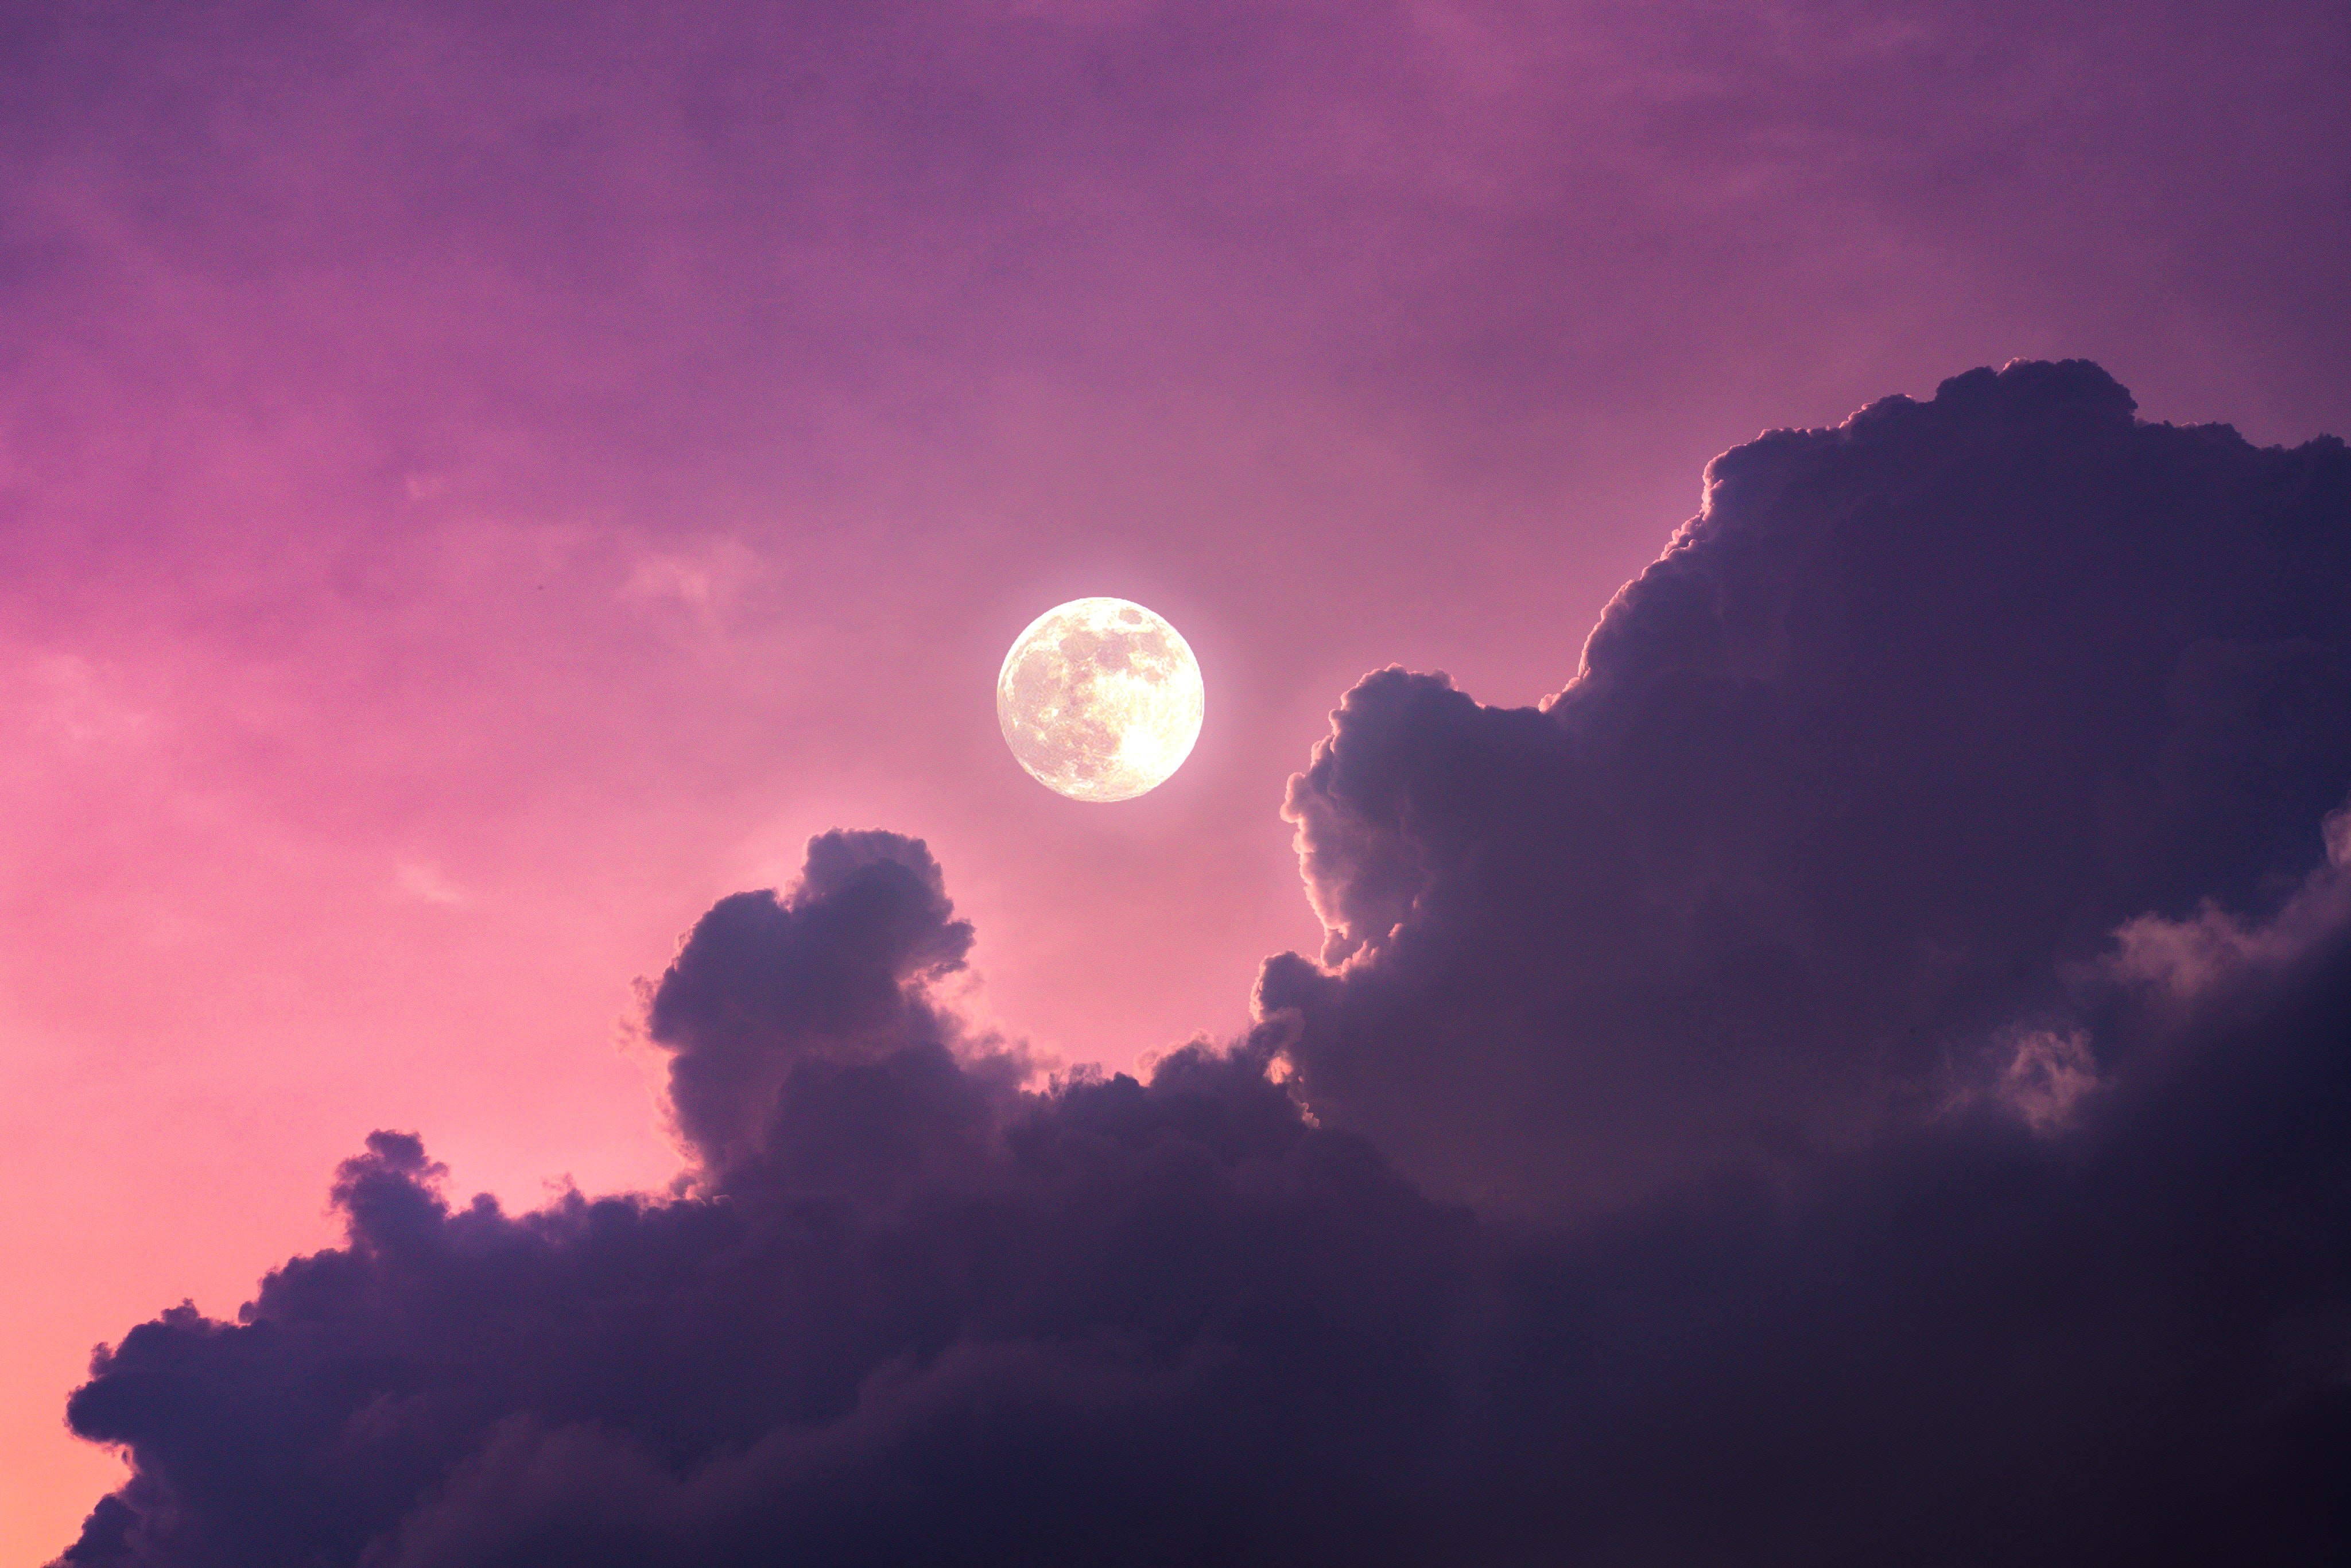 Full moon 4K Wallpaper, Clouds, Pink sky, Nature, #1653